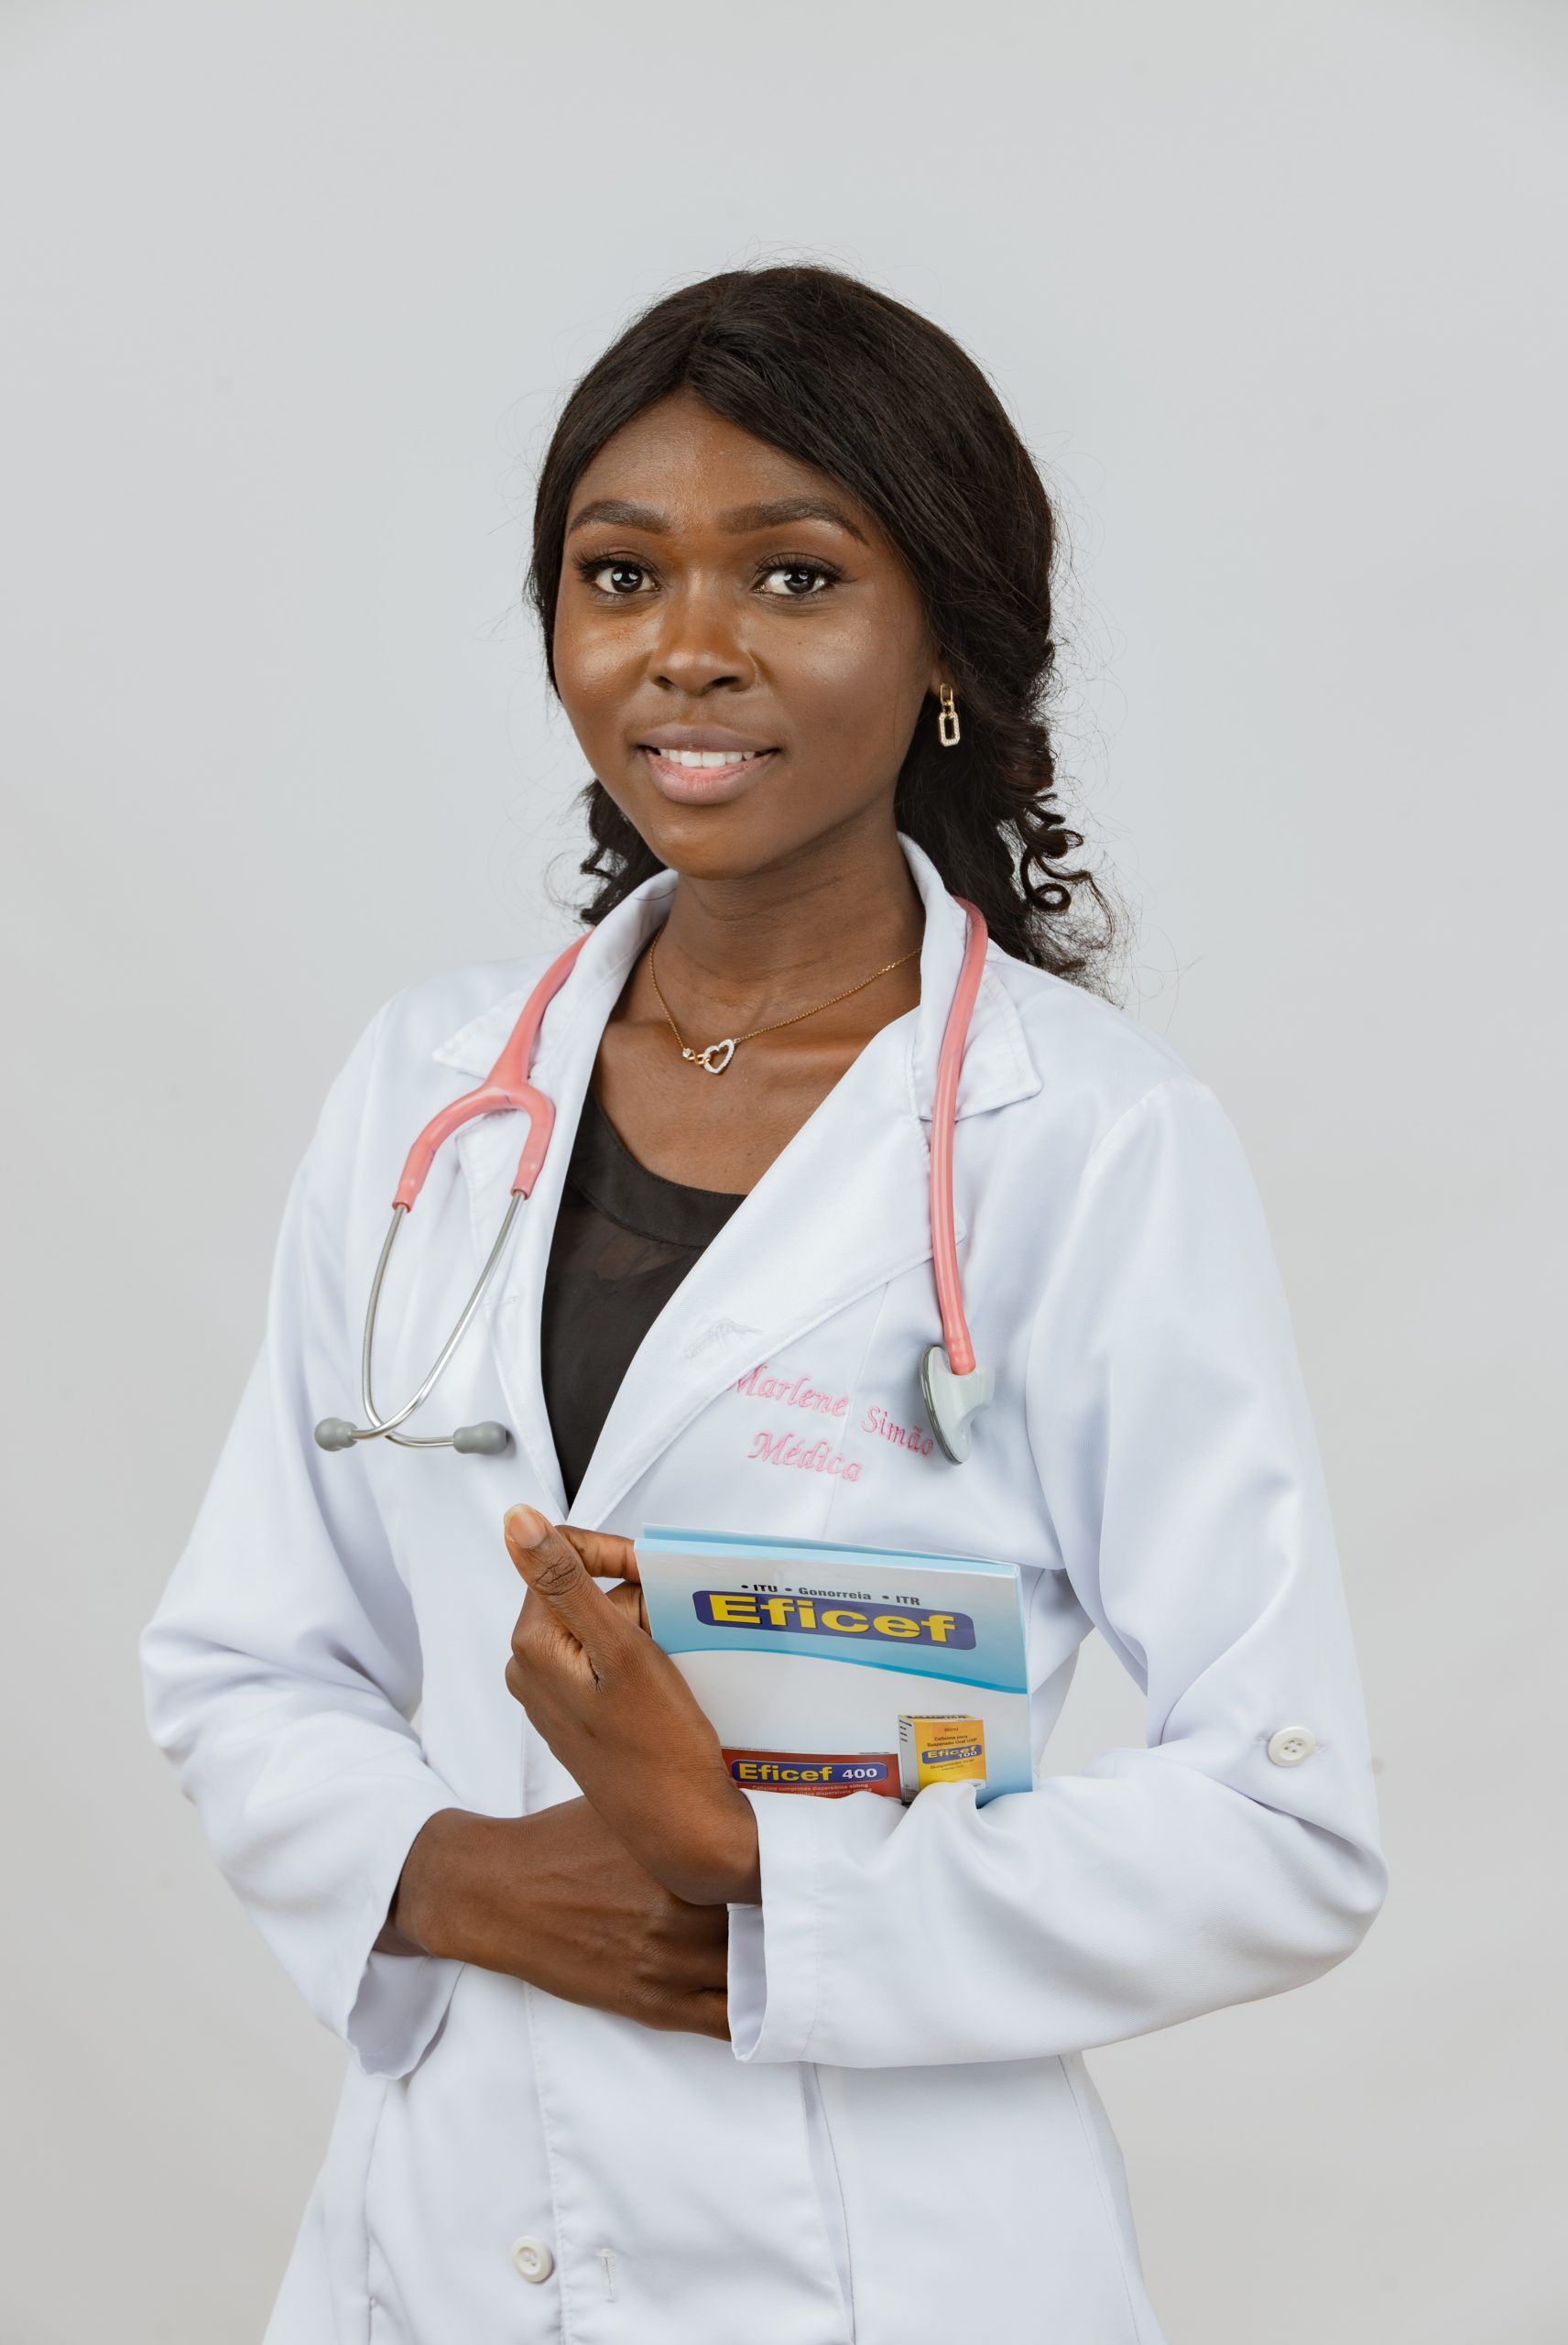 A smiling Black female doctor